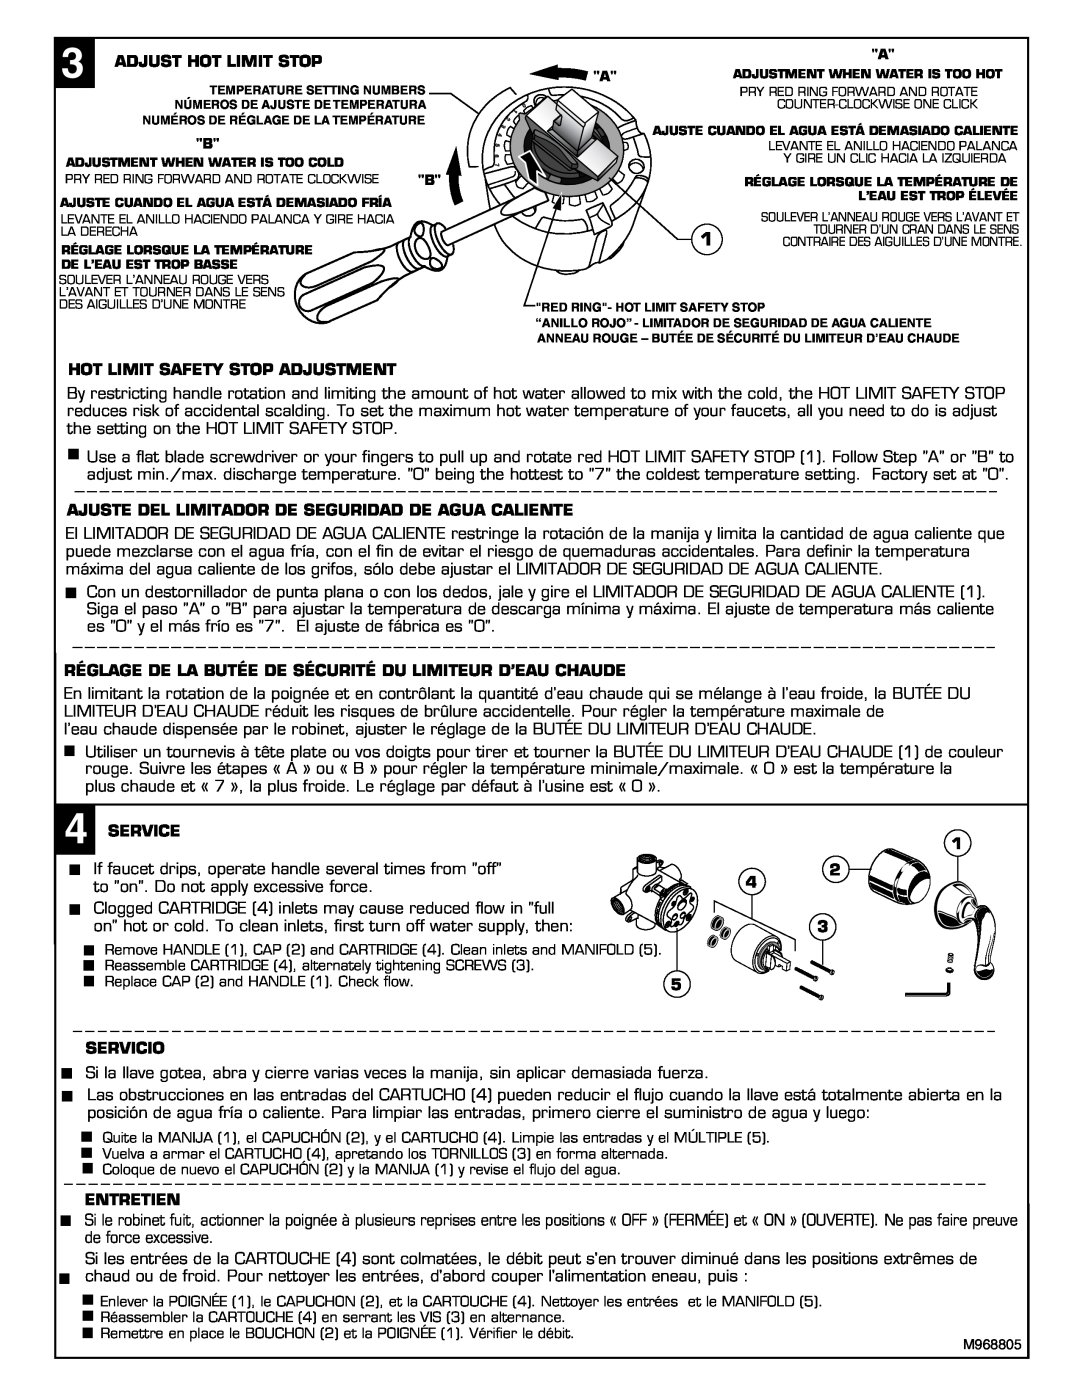 American Standard 4501 installation instructions Adjust Hot Limit Stop 